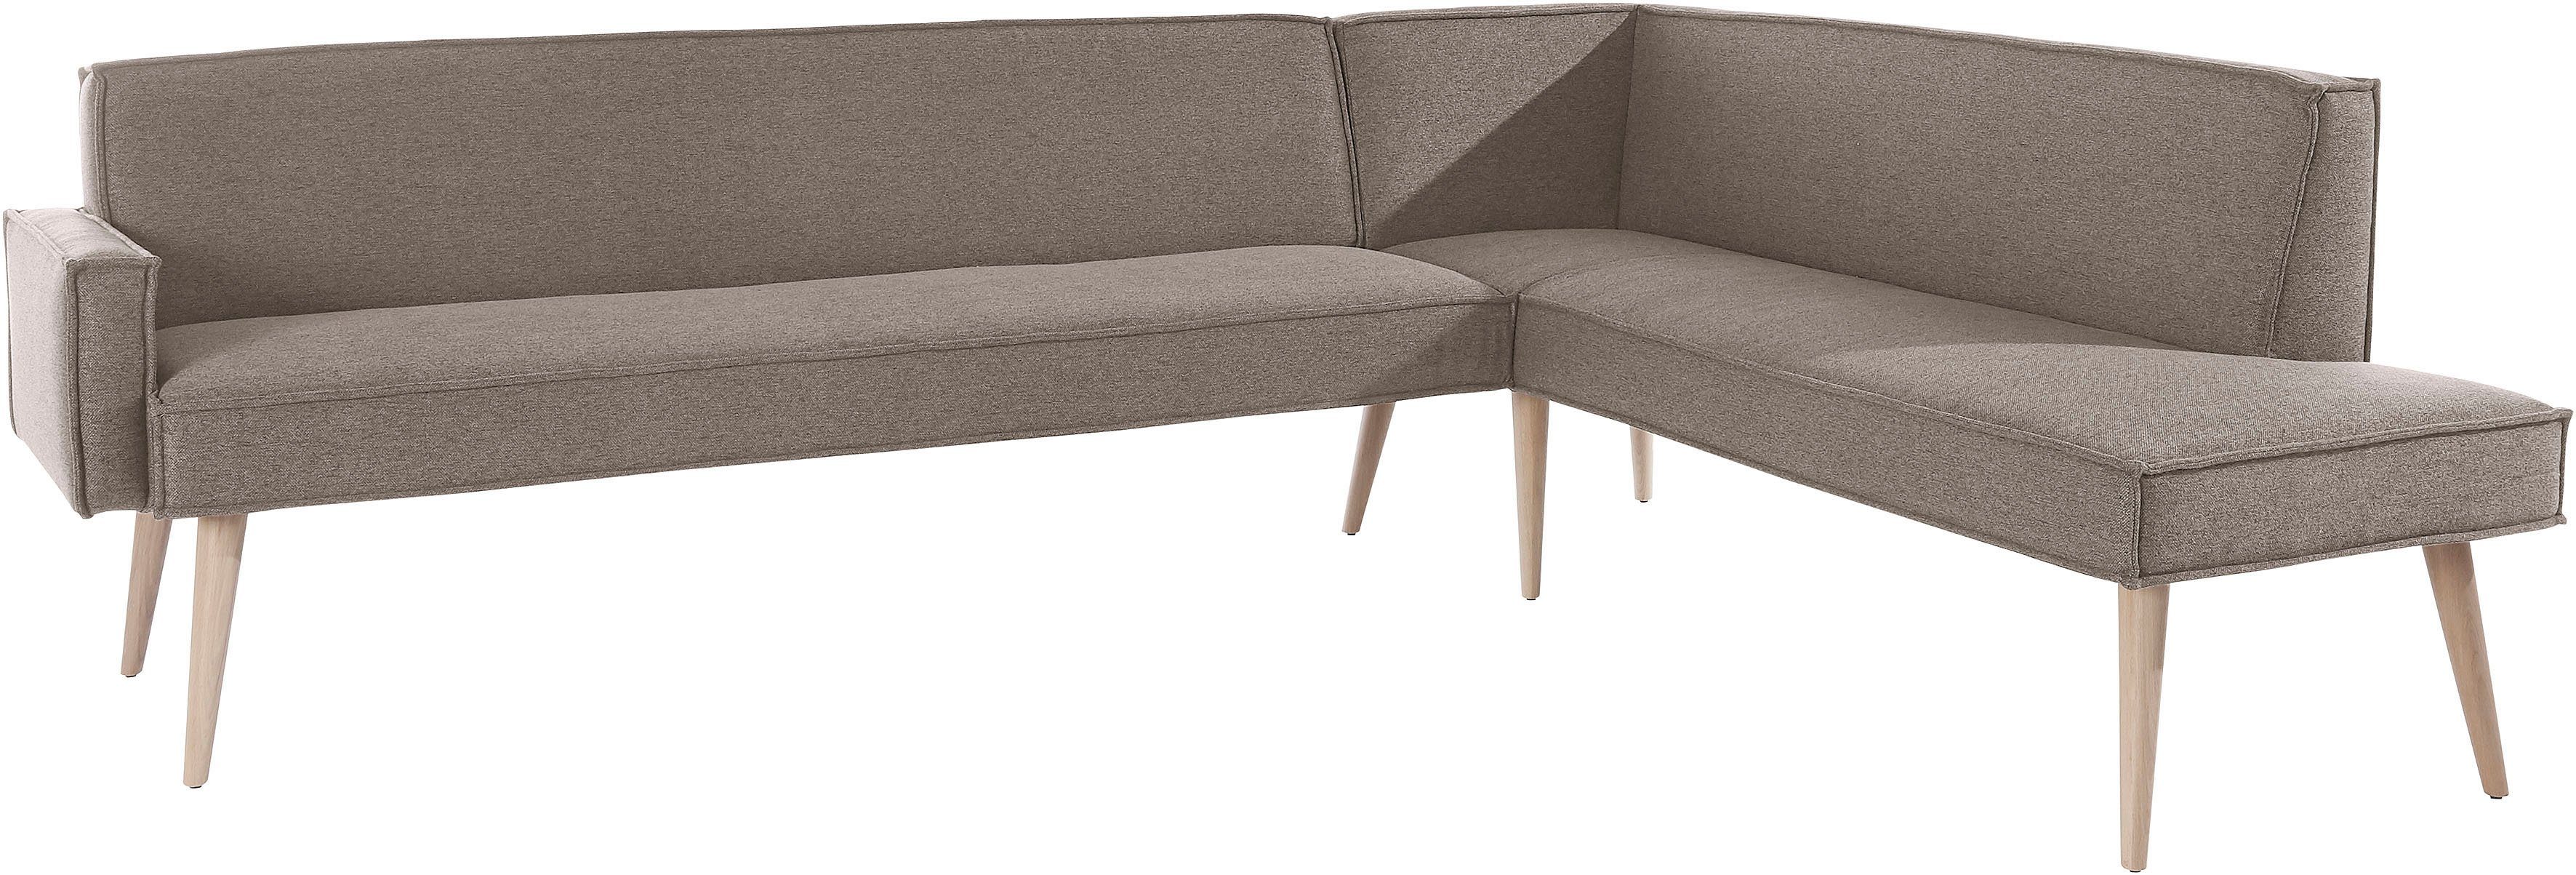 In sofa hochwertiger im Lungo, Frei fashion Verarbeitung exxpo stellbar, Raum Eckbank -